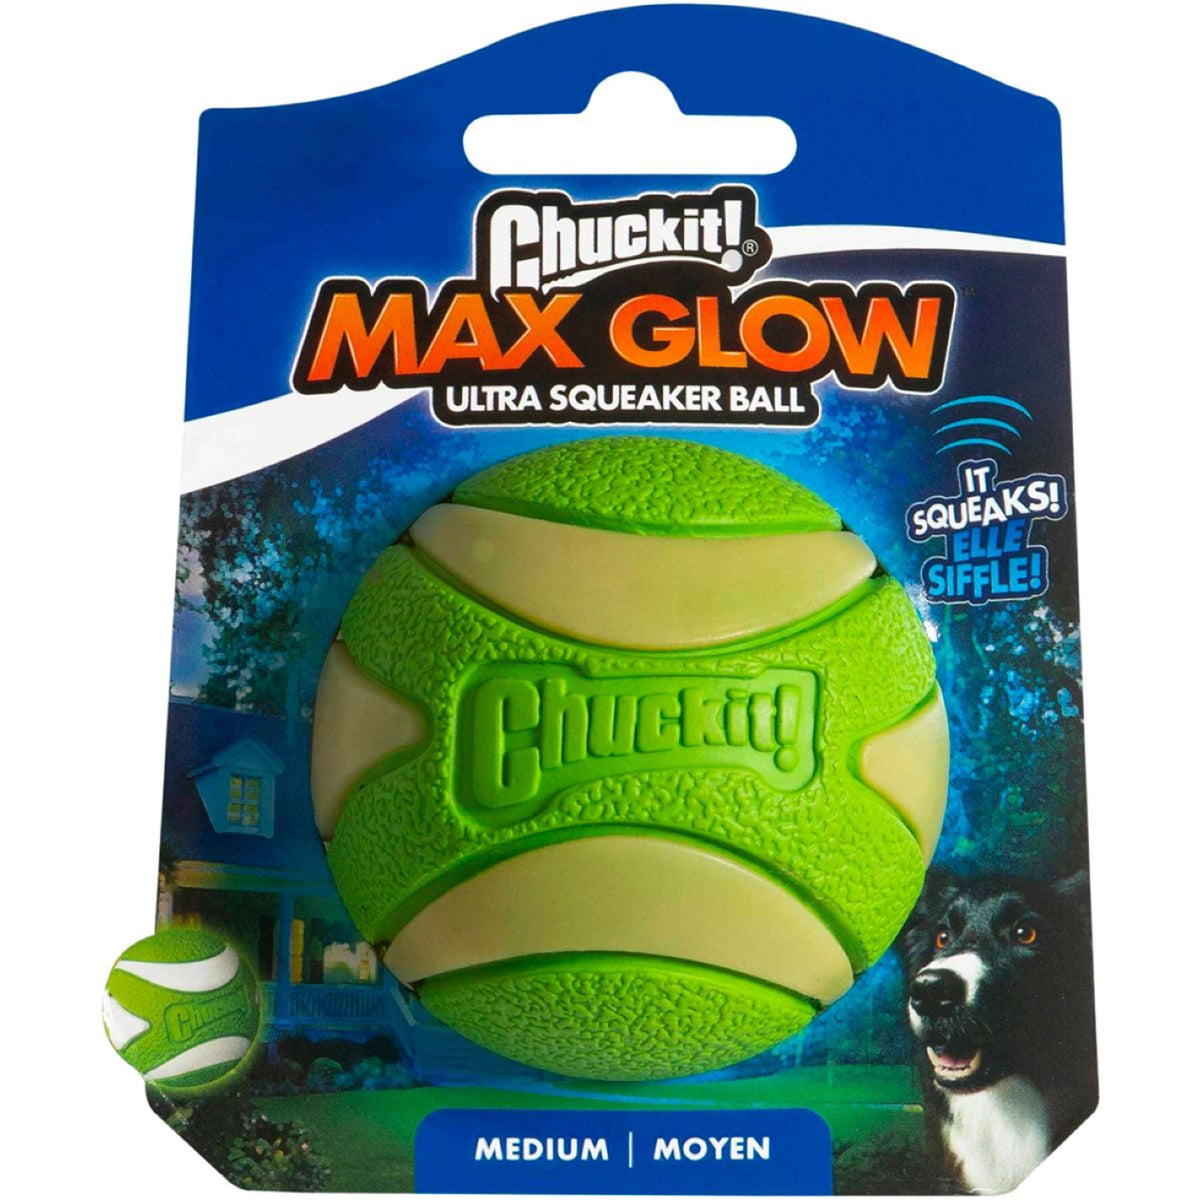 Chuckit Ball Max Glow Ultra Squeaker